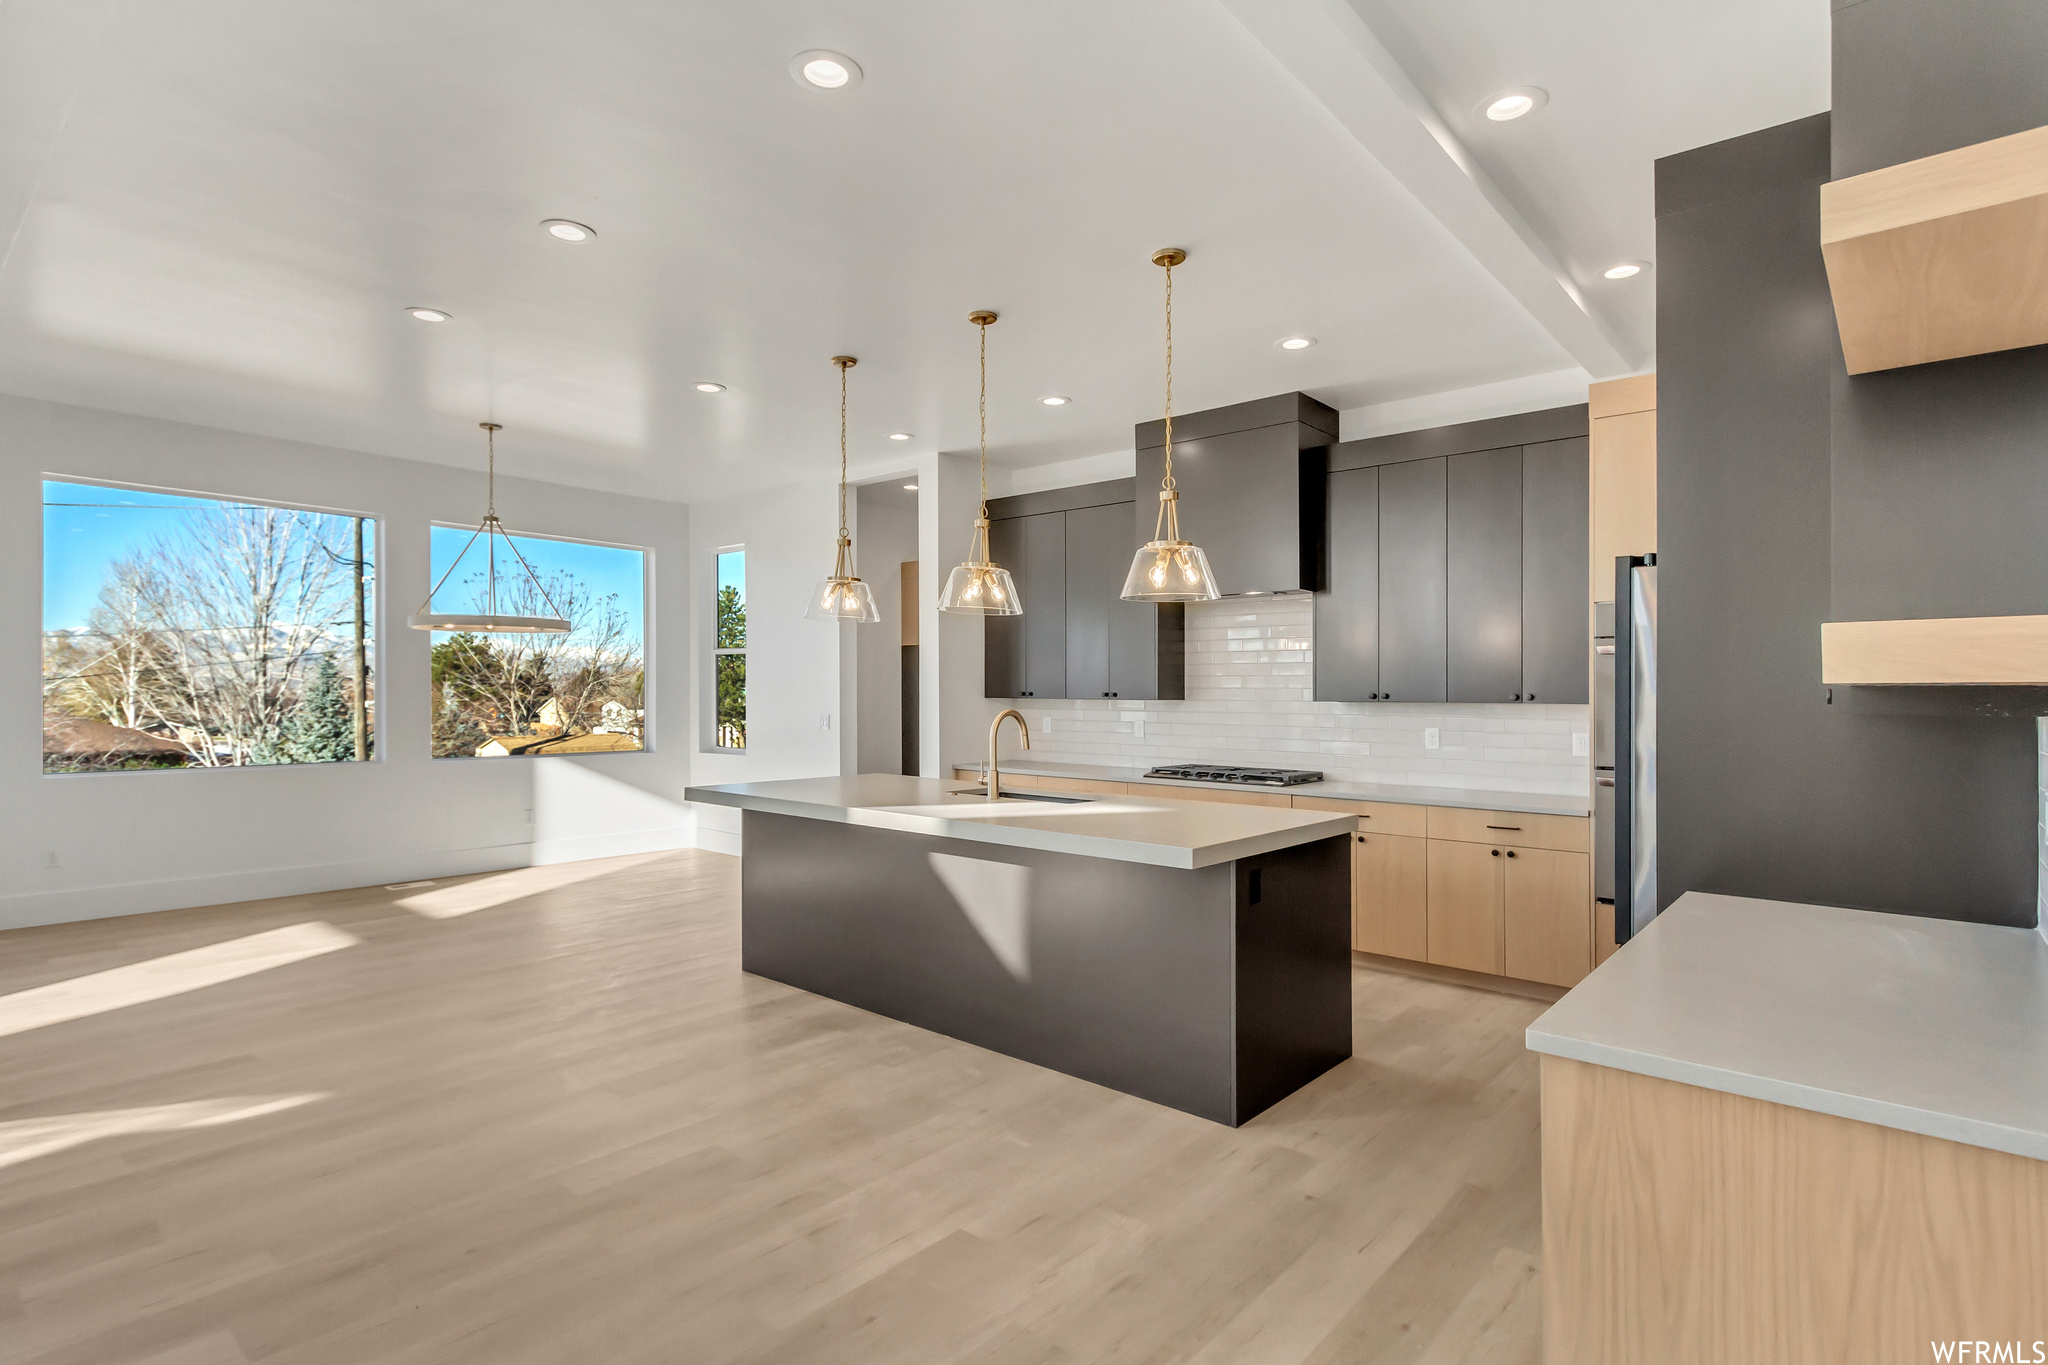 Kitchen featuring sink, light hardwood / wood-style floors, tasteful backsplash, decorative light fixtures, and a center island with sink